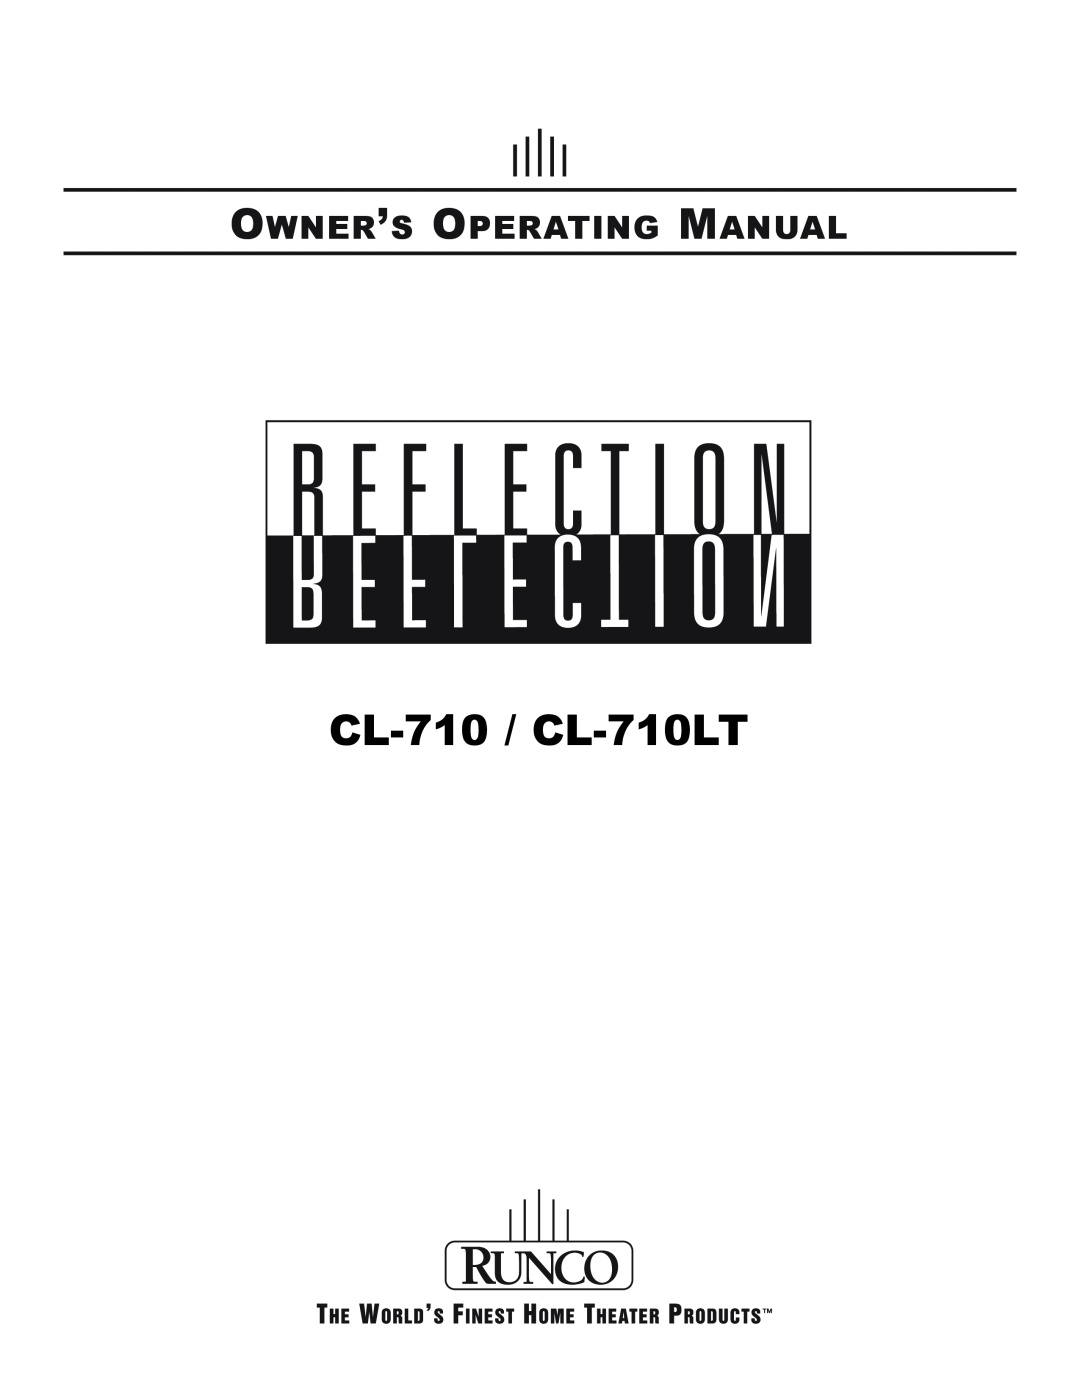 Runco manual CL-710 / CL-710LT, Owner’S Operating Manual 